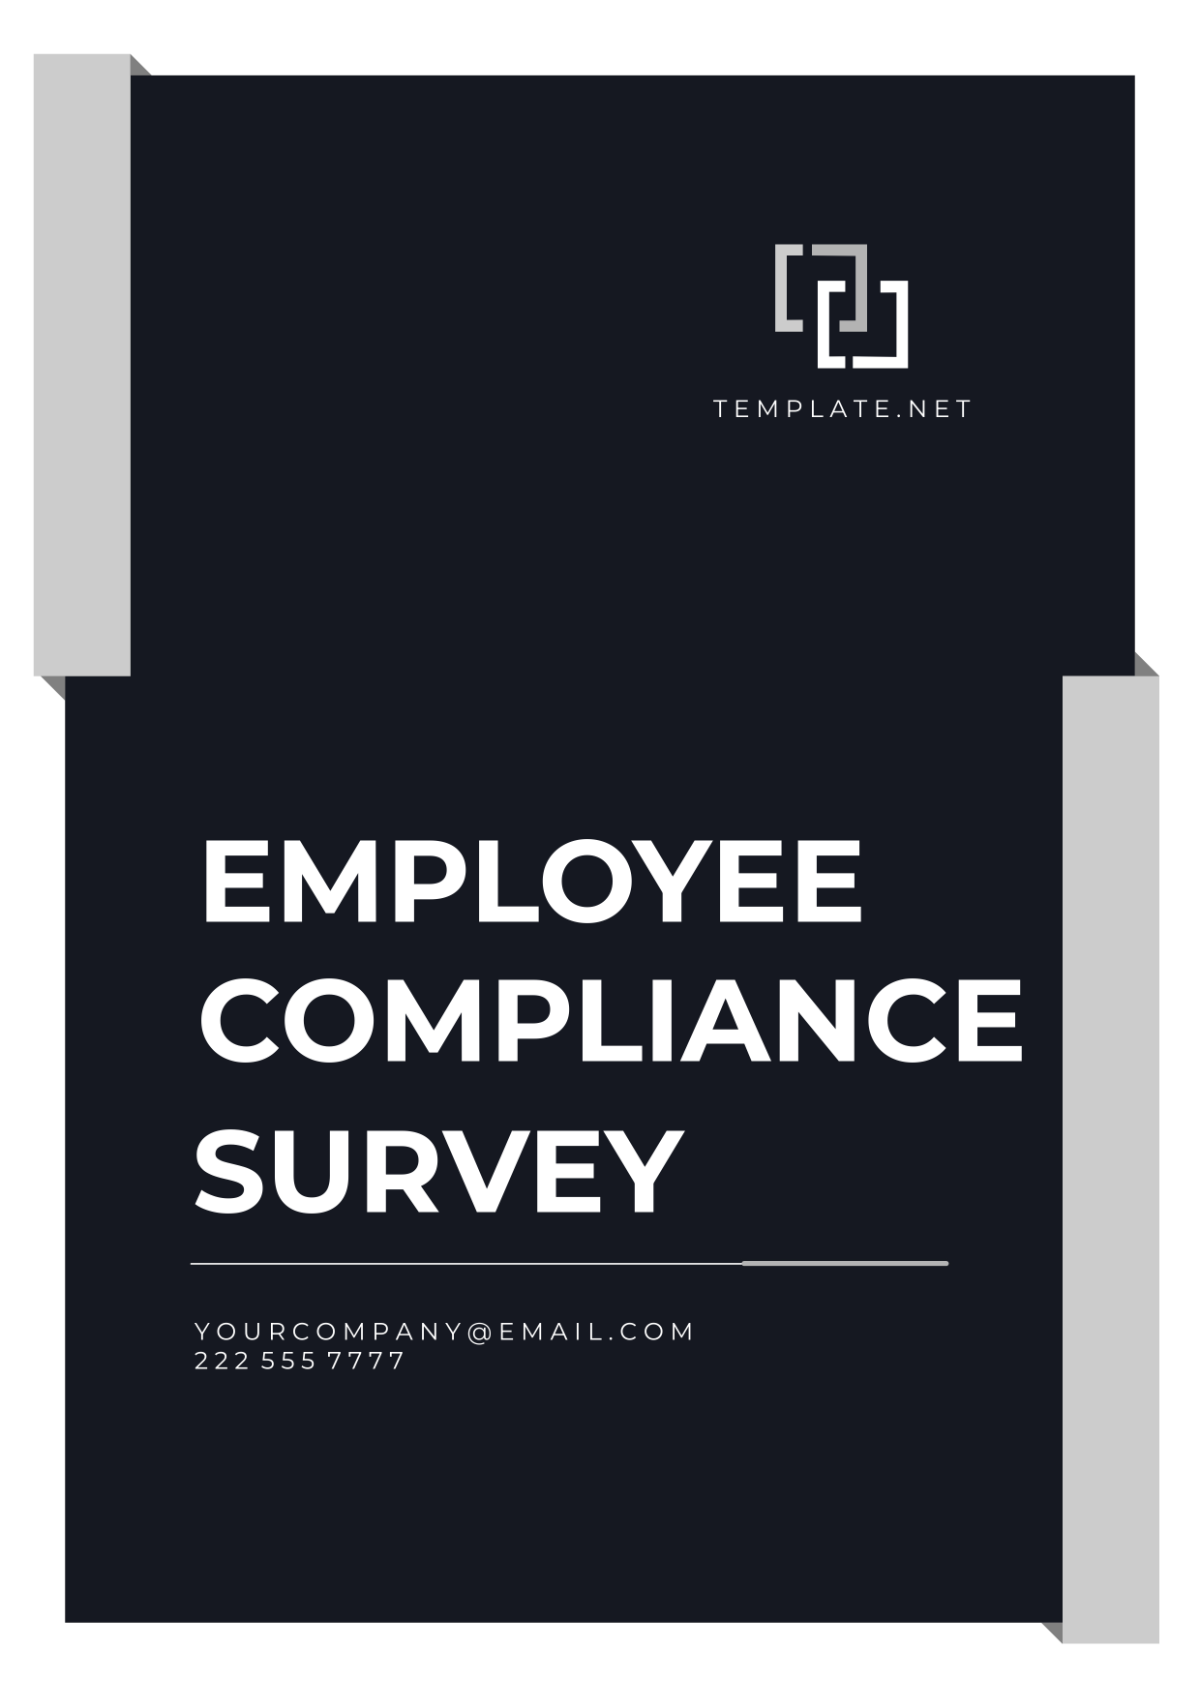 Employee Compliance Survey Template